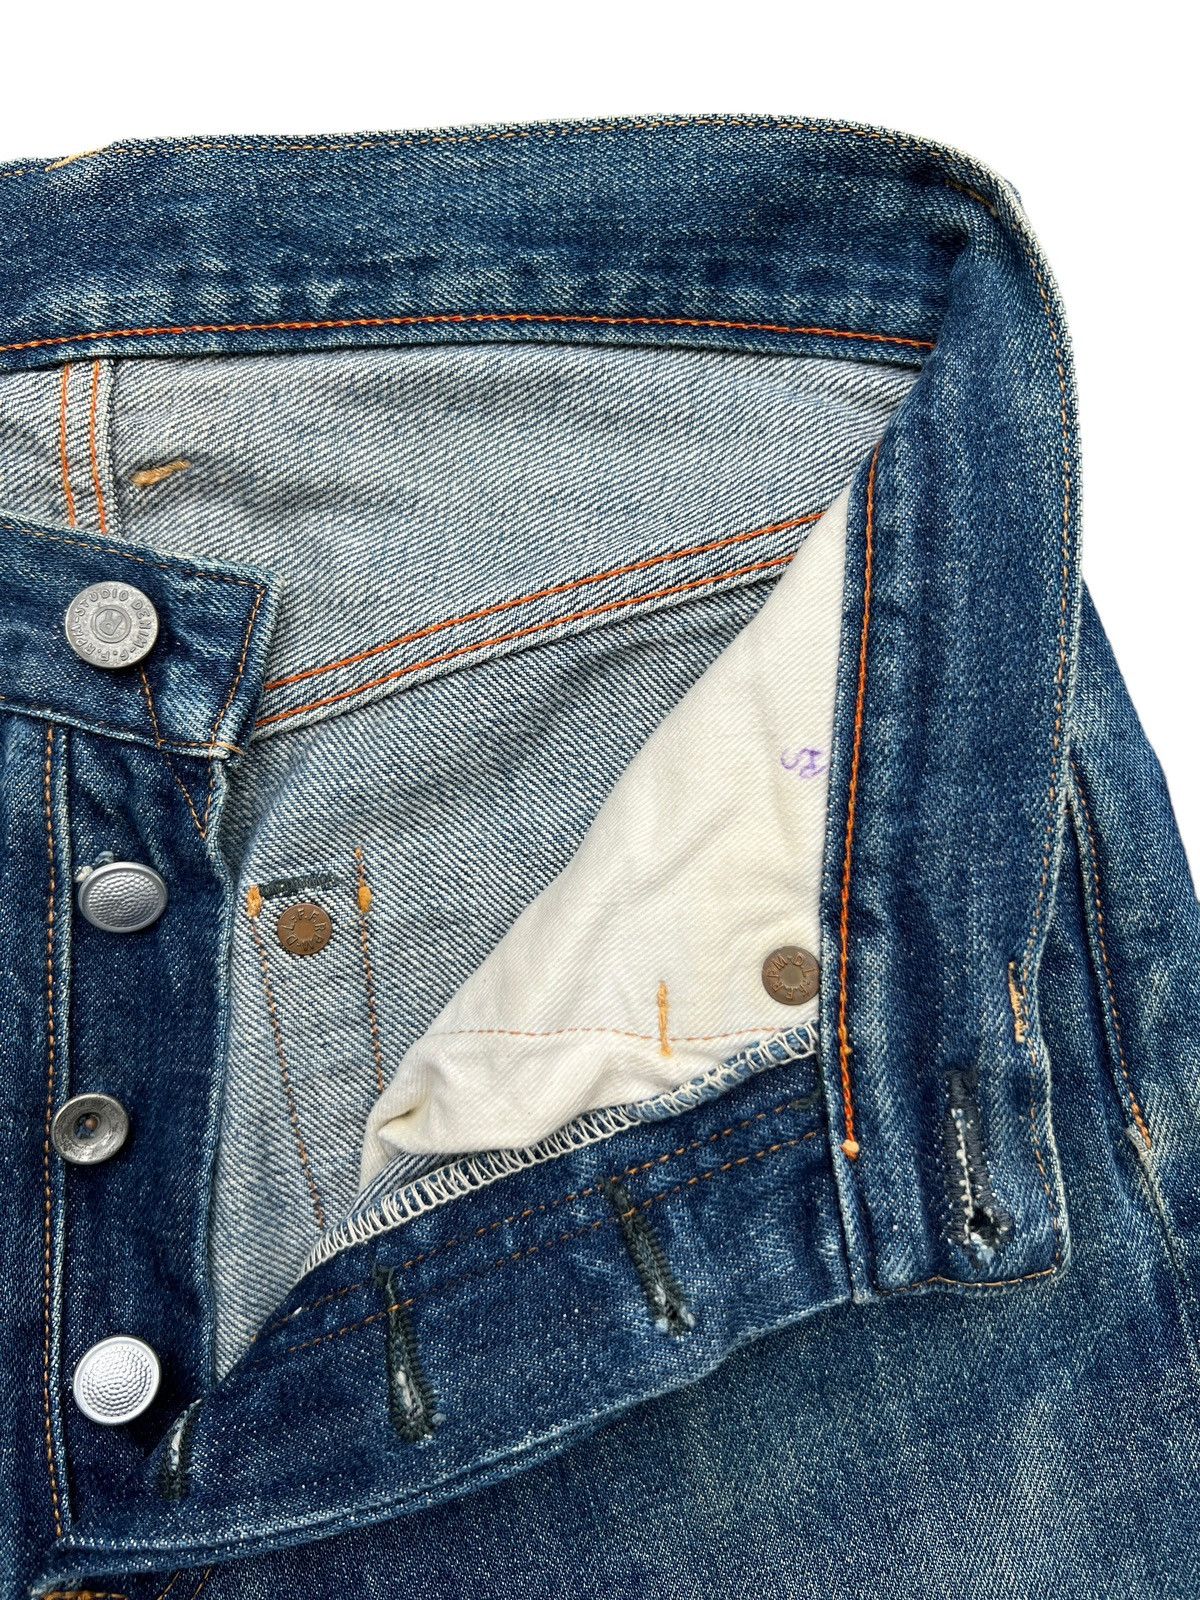 Vintage 45Rpm Selvedge Faded Distressed Denim Jeans 29x29 - 12